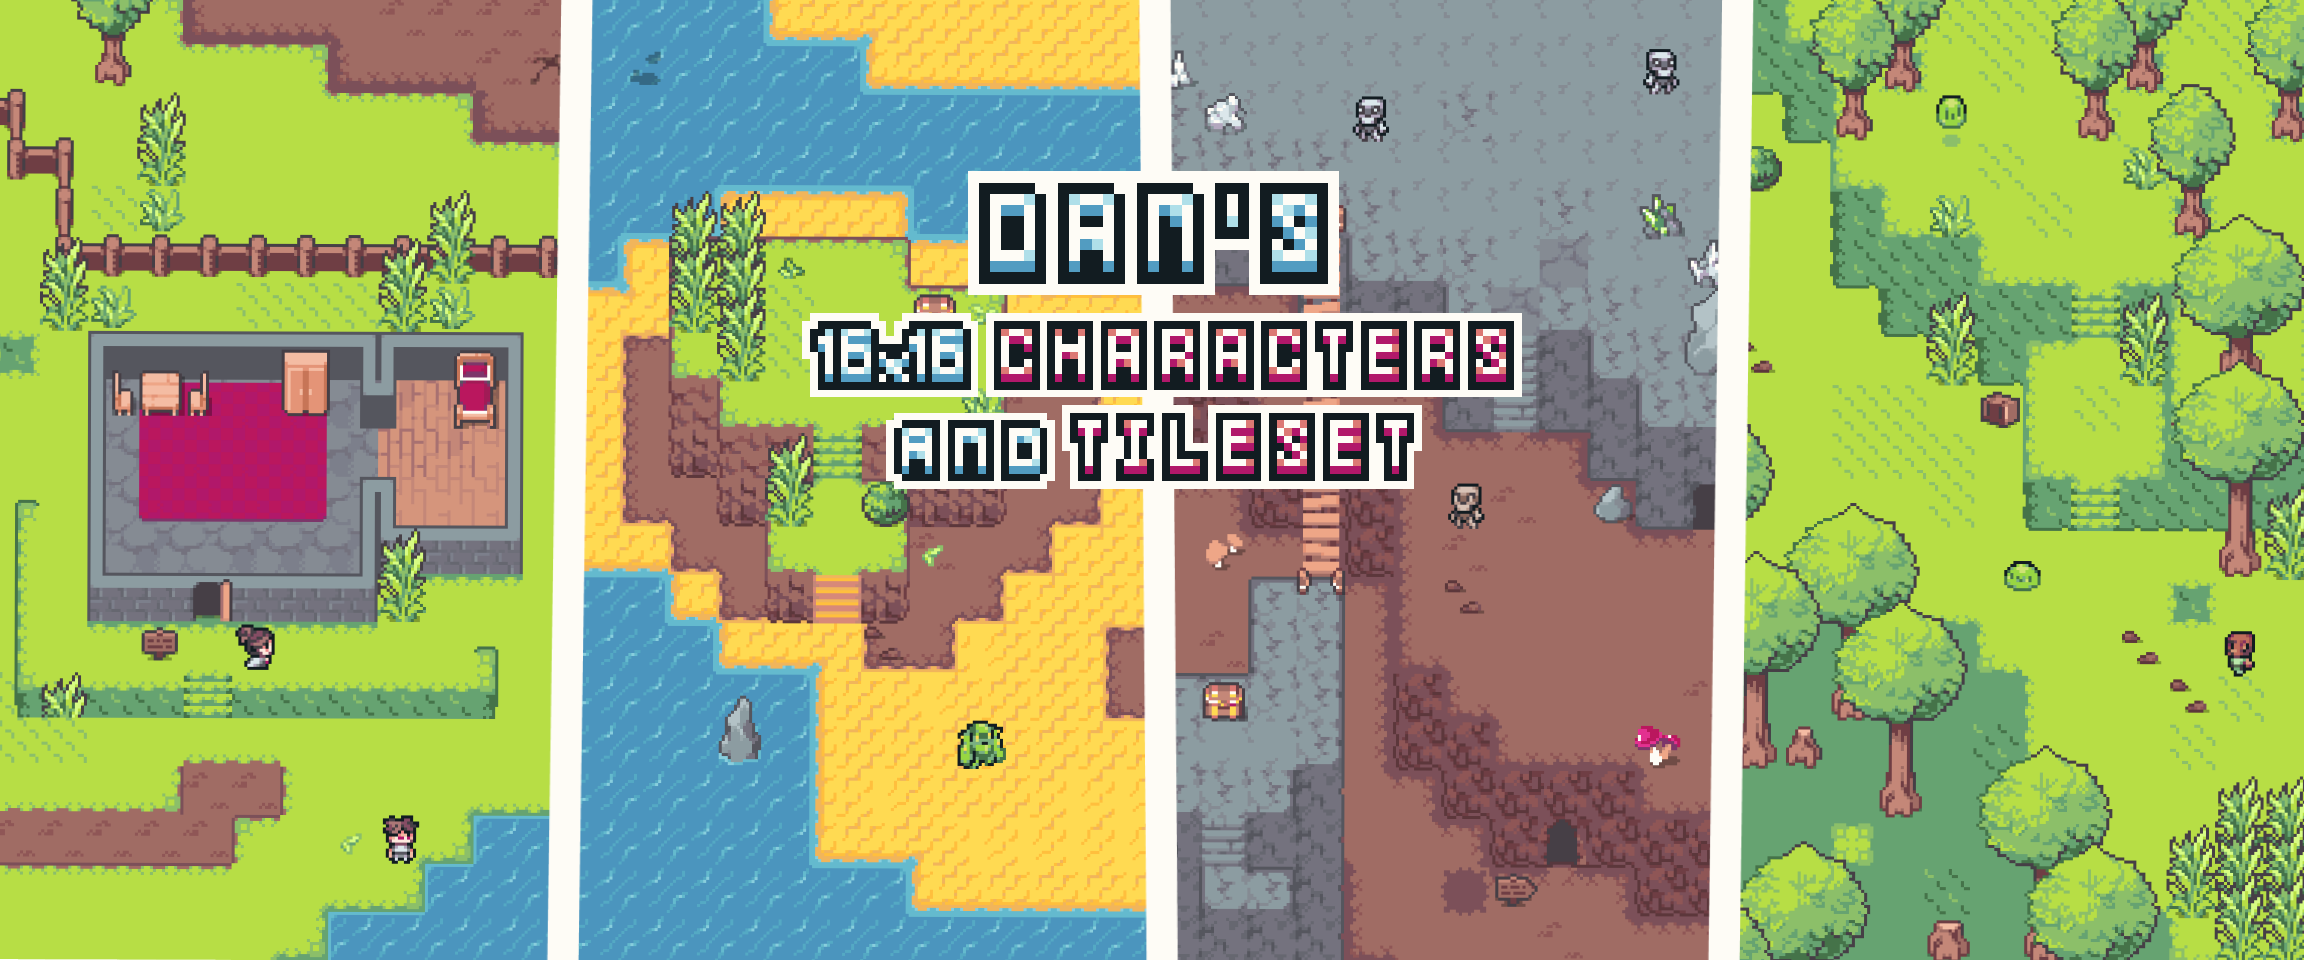 Dan's [16x16] RPG Fantasy Character and Tileset